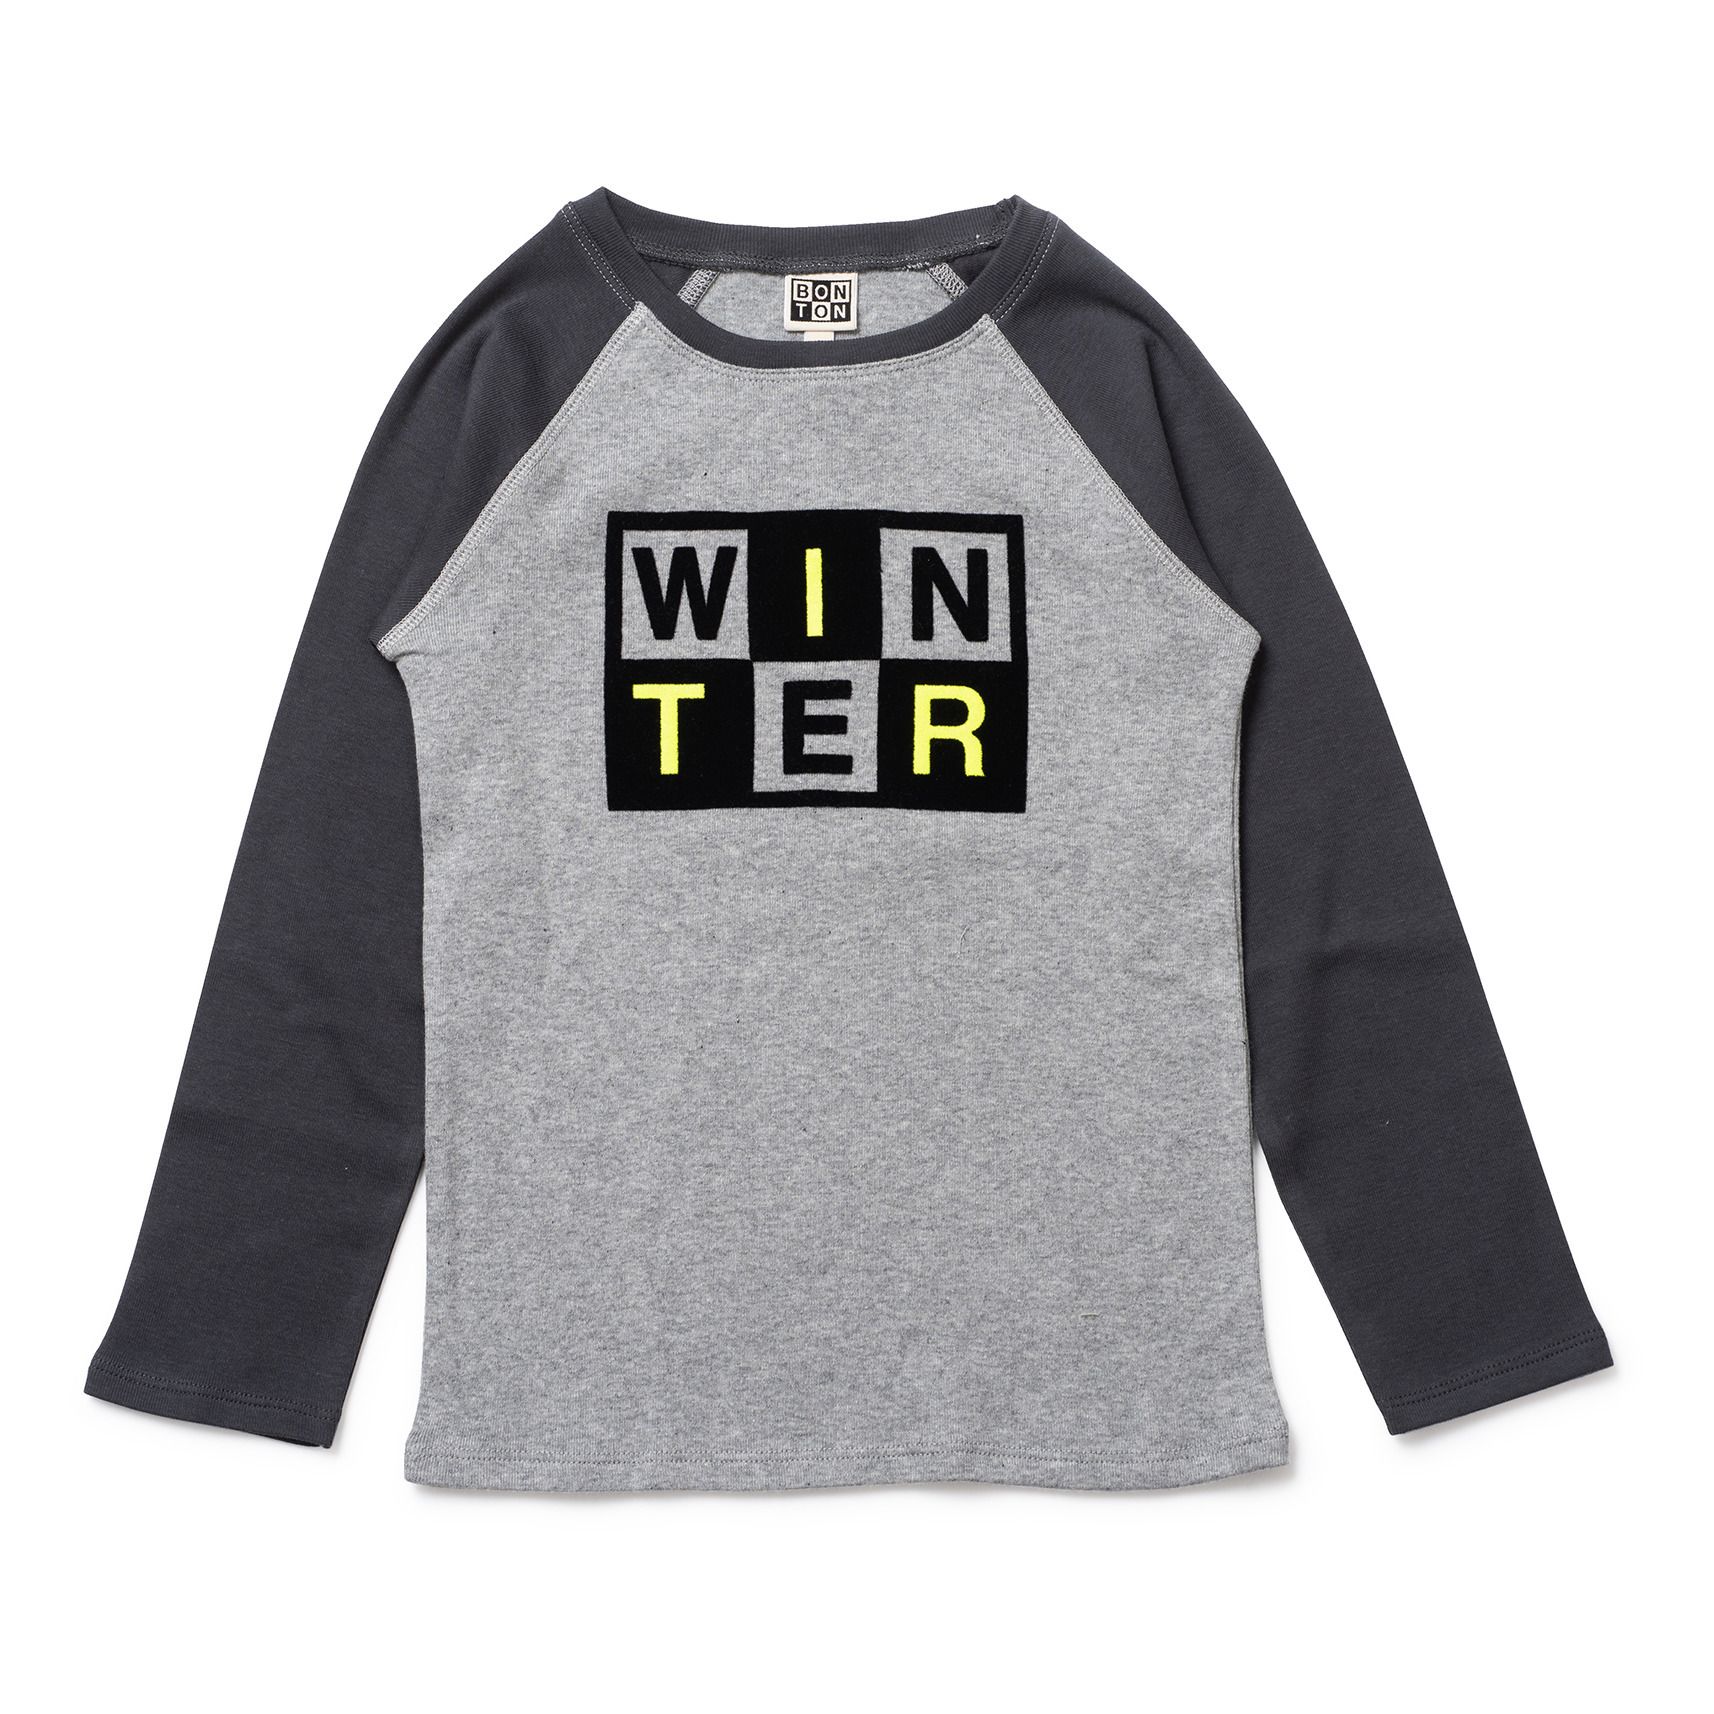 Bonton - Winter T-shirt - Heather grey | Smallable